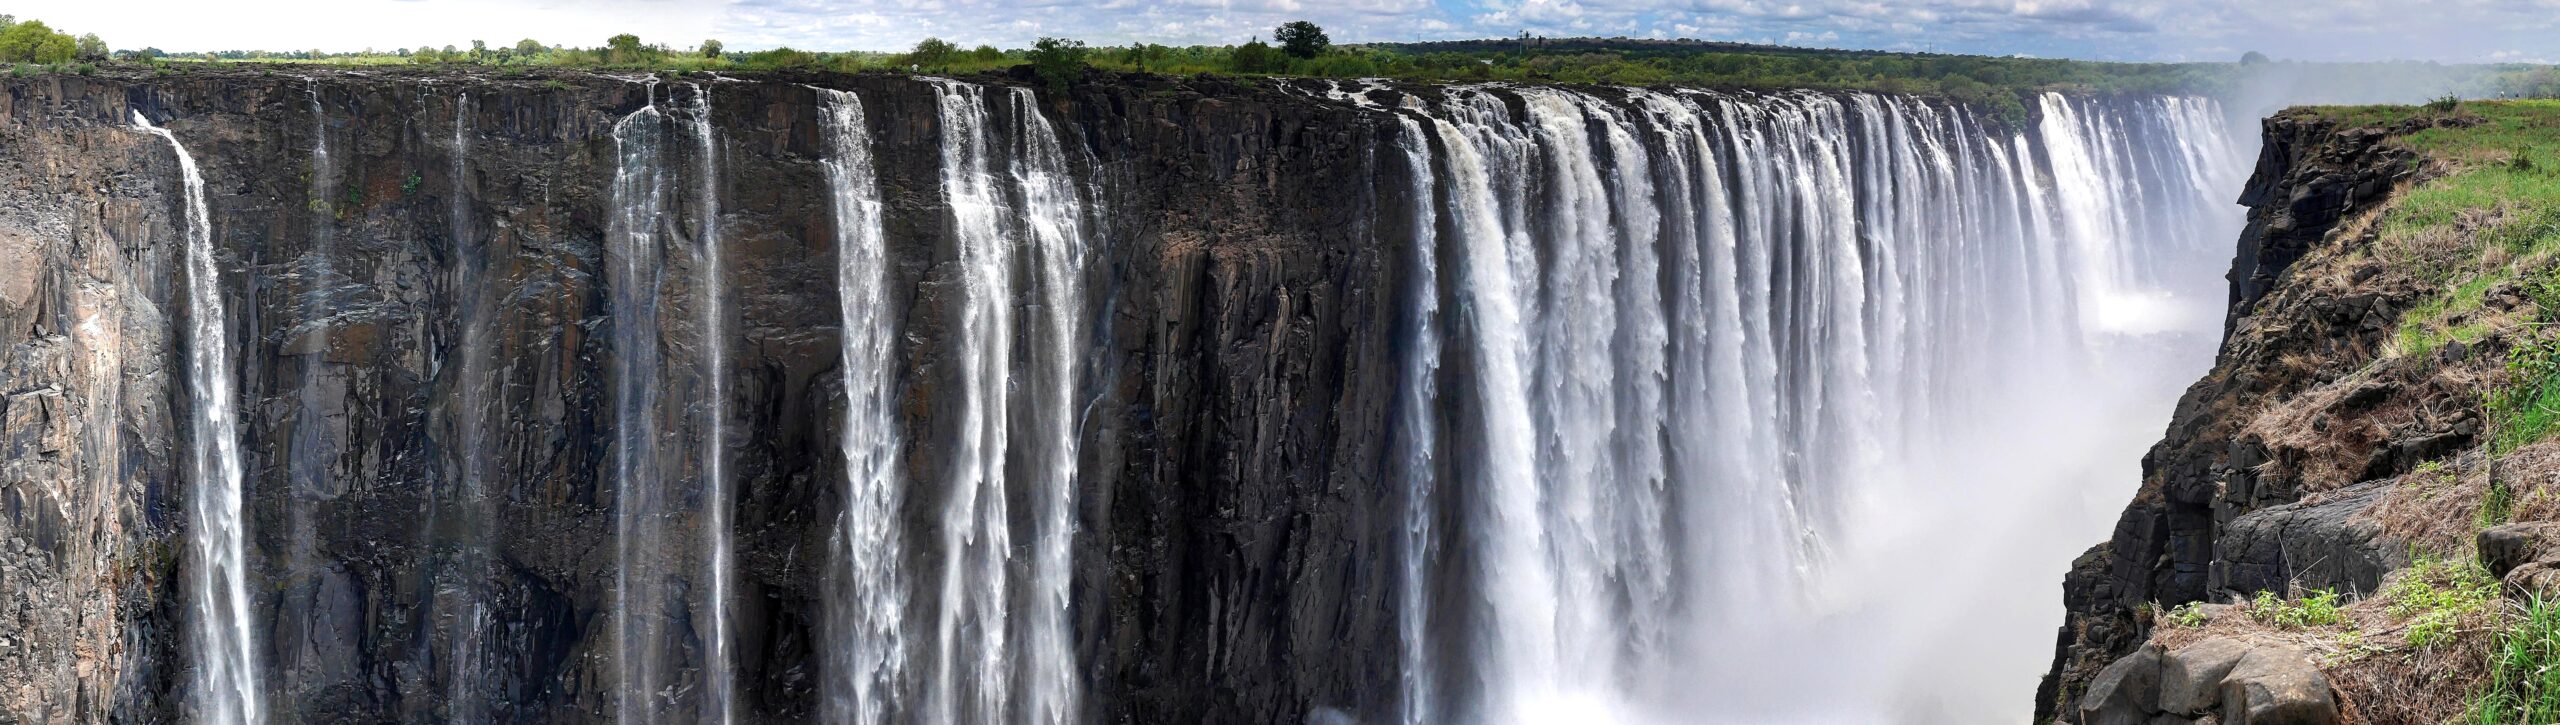 Voyage au Zimbabwa aux chutes Victoria